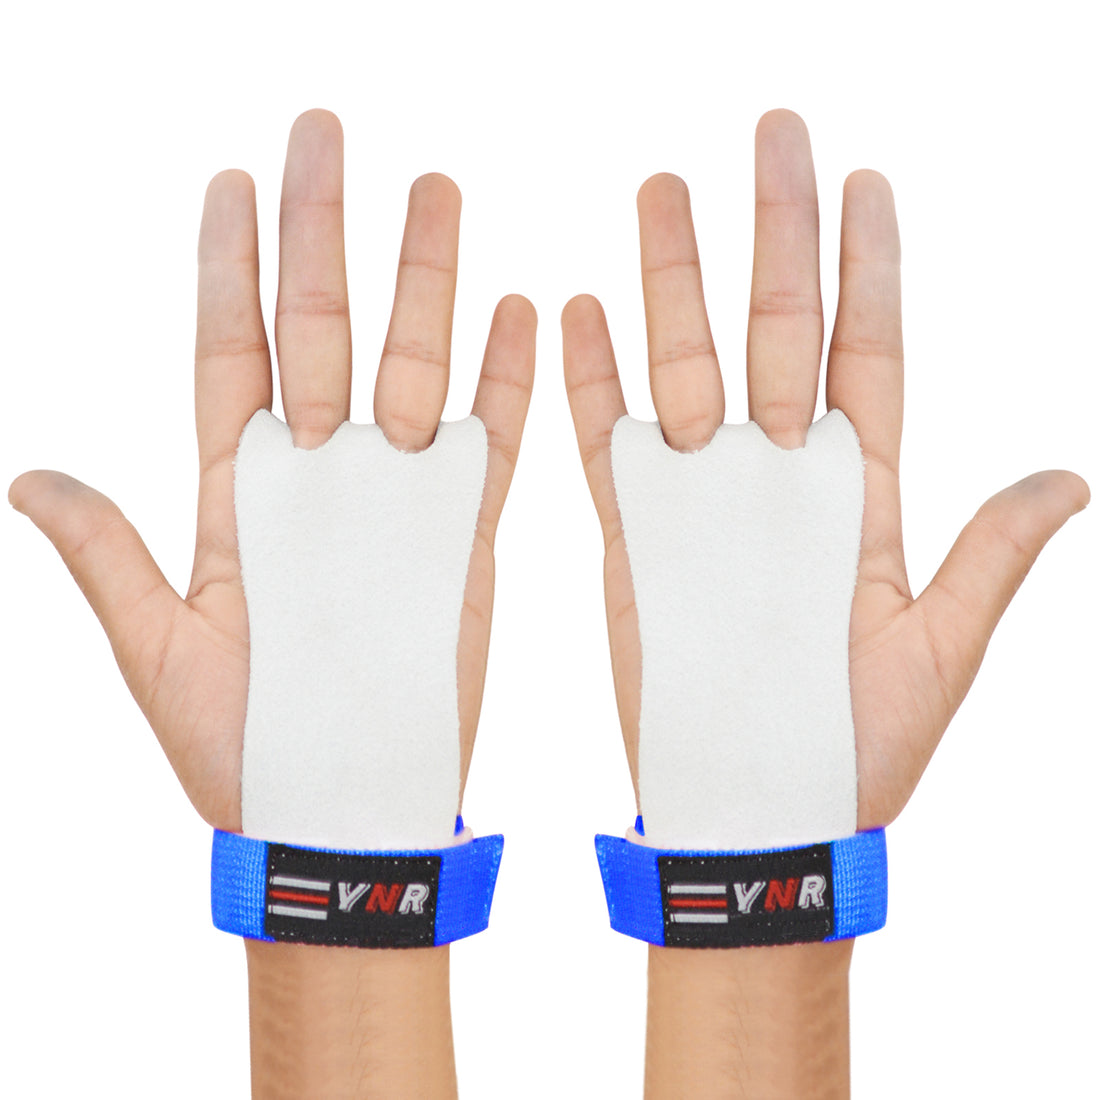 YNR Gymnastics Palm Hand Guards | Children's Beginner Grips | YNR Sports Fitness